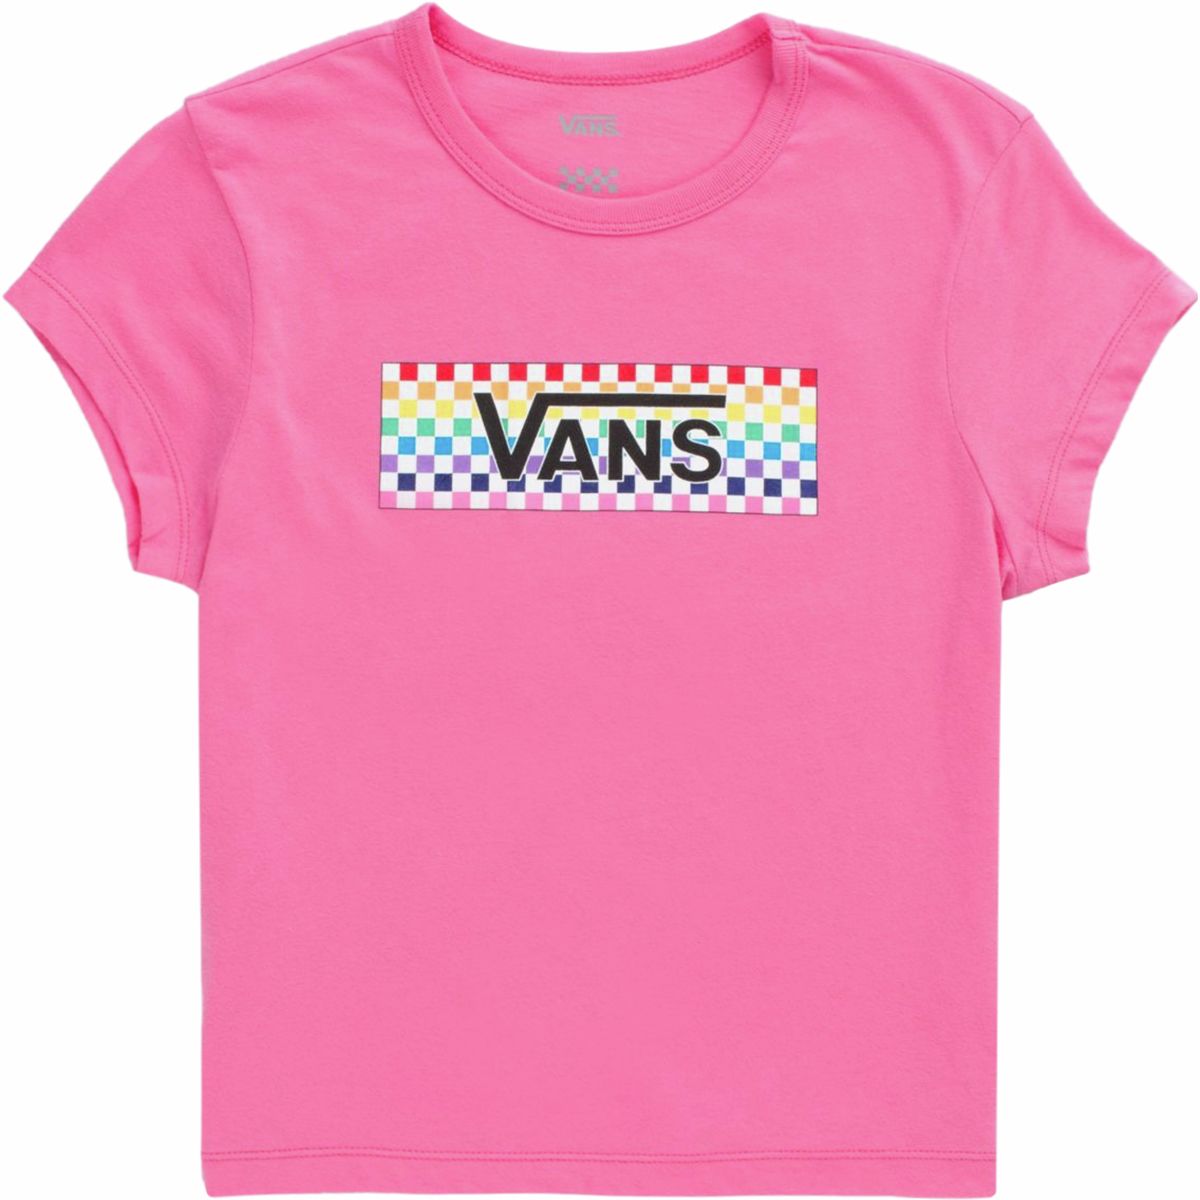 Vans Check Tangle Baby Shirt - Girls' - Kids